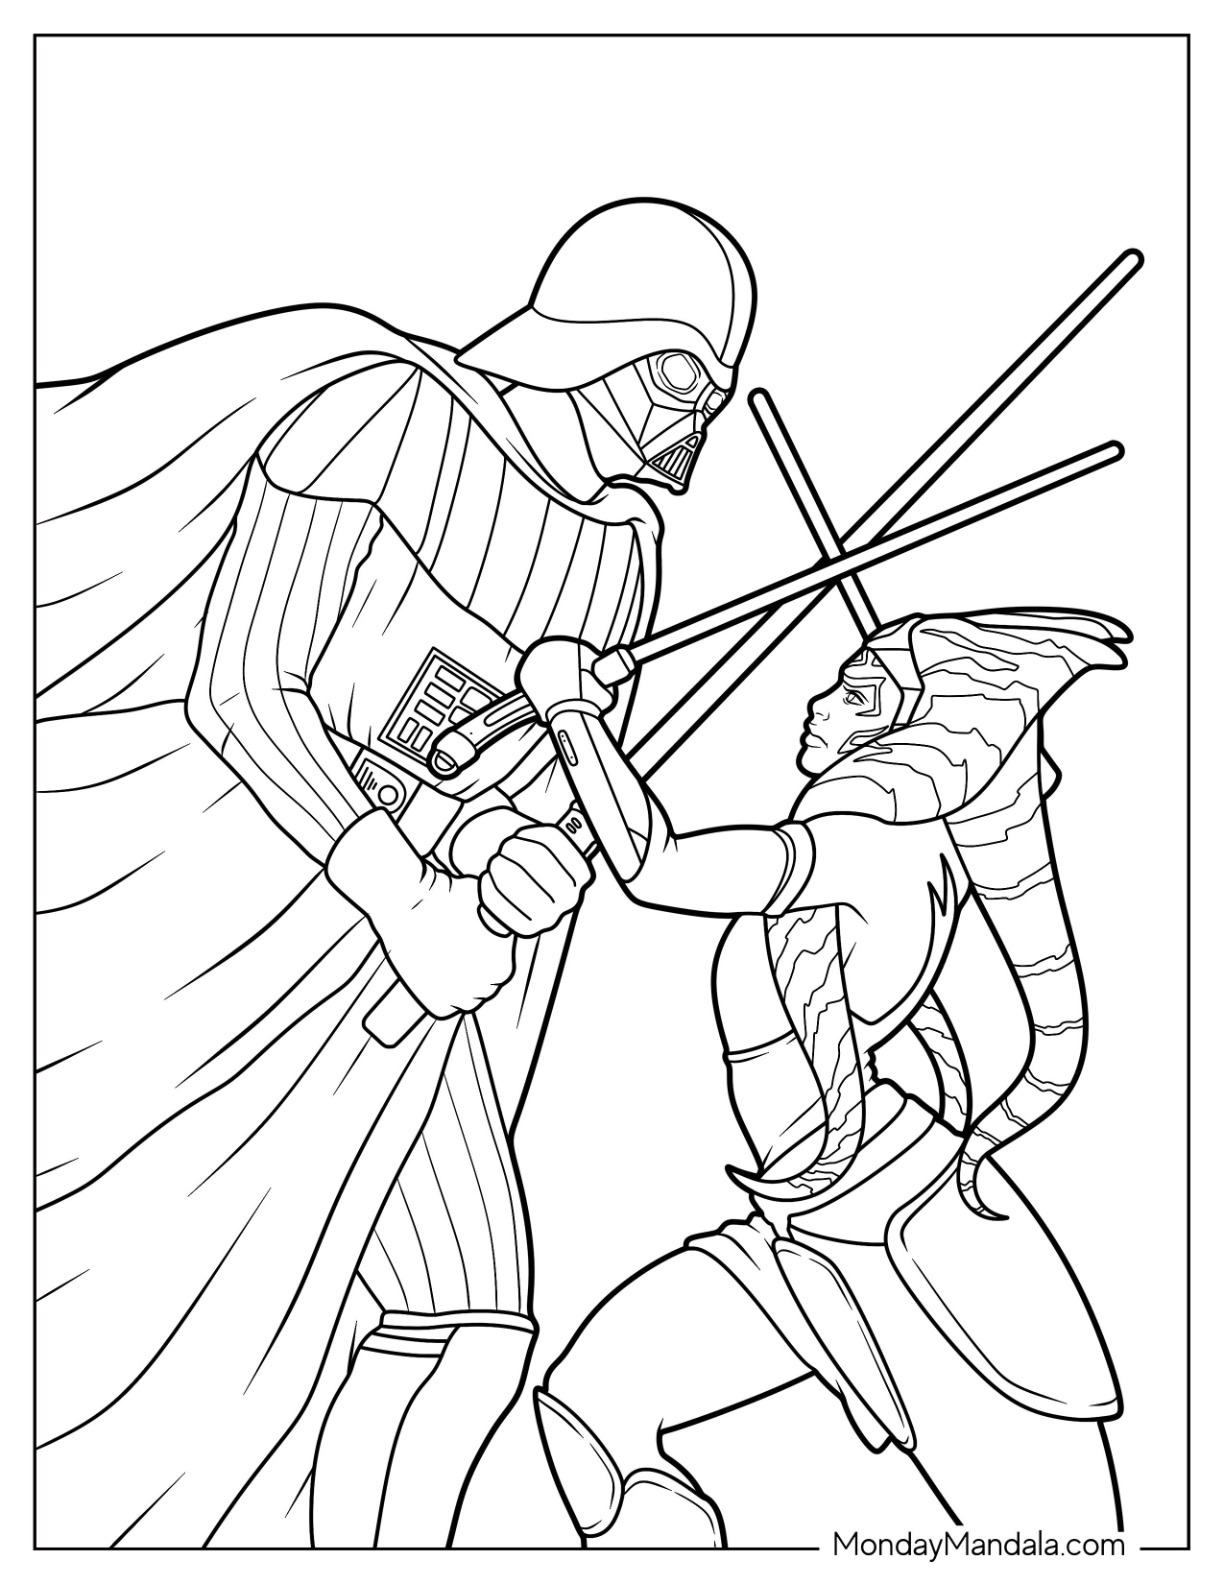 Darth Vader lucha contra Ahsoka - Star Wars - Dibujos para colorear ...